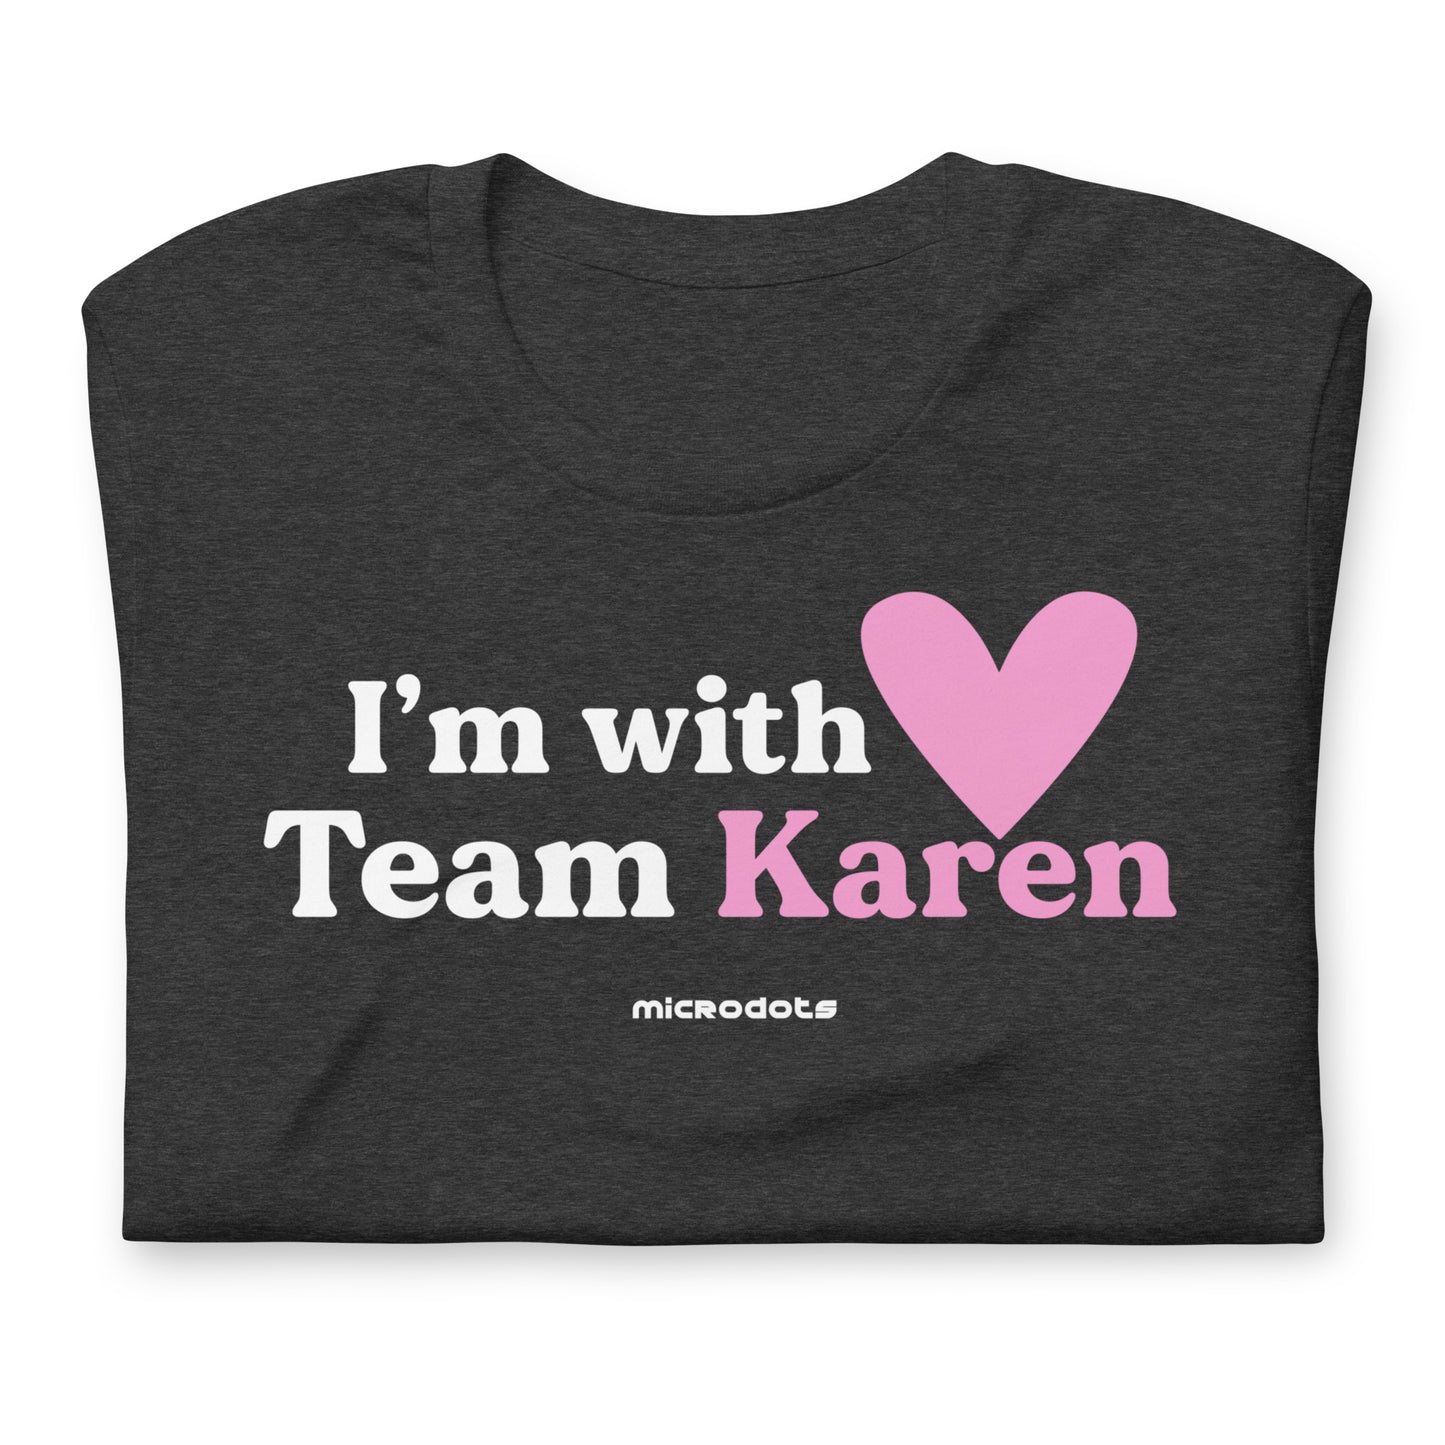 Microdots "I'm with Team Karen" - Unisex t-shirt